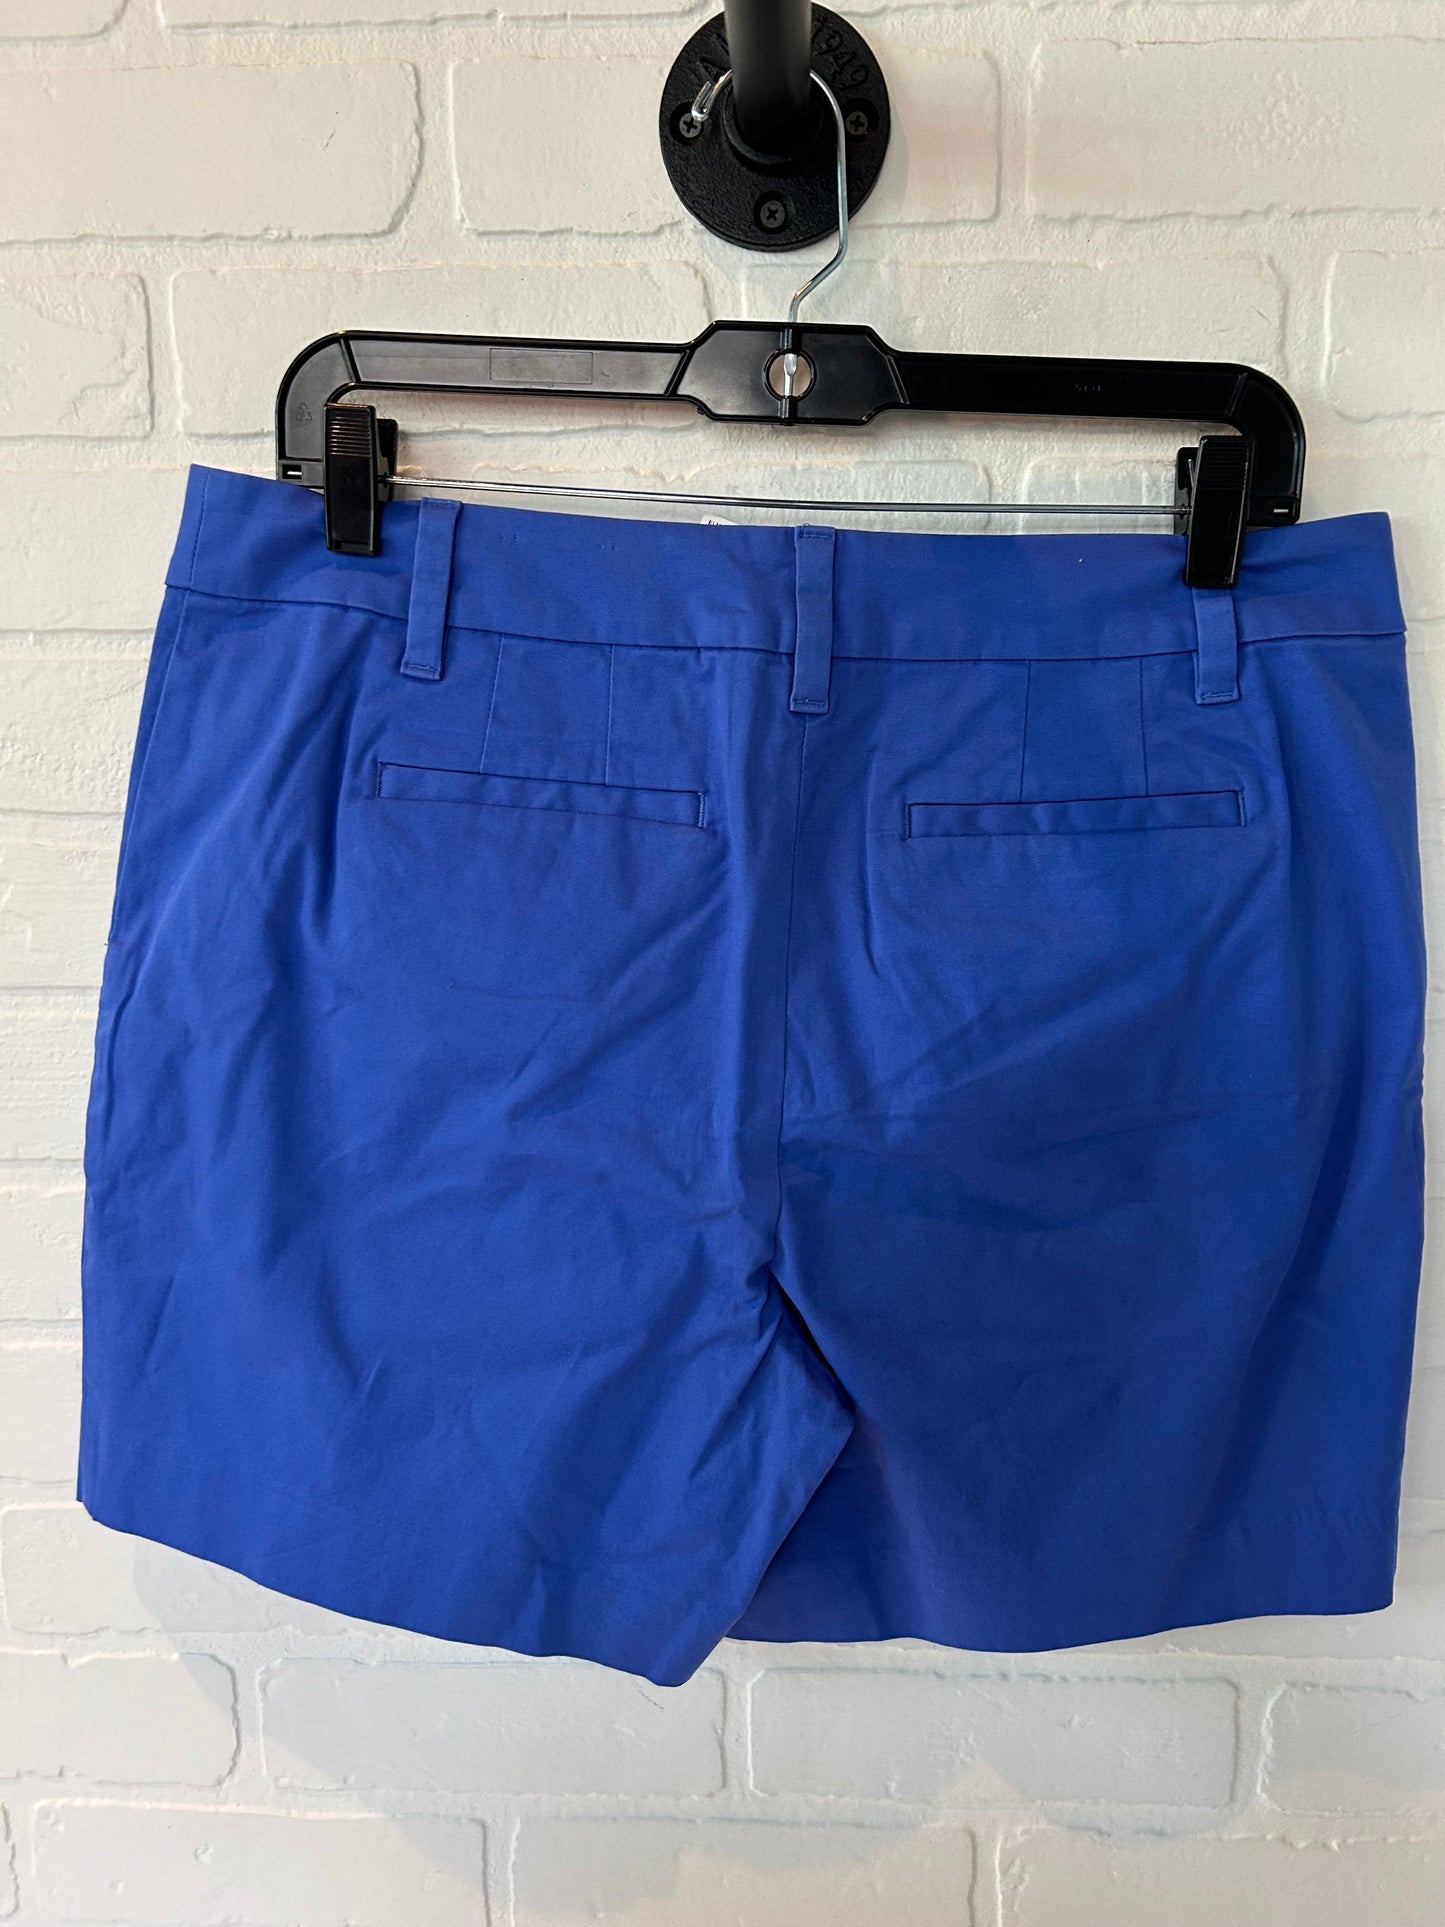 Blue Shorts Talbots, Size 10petite